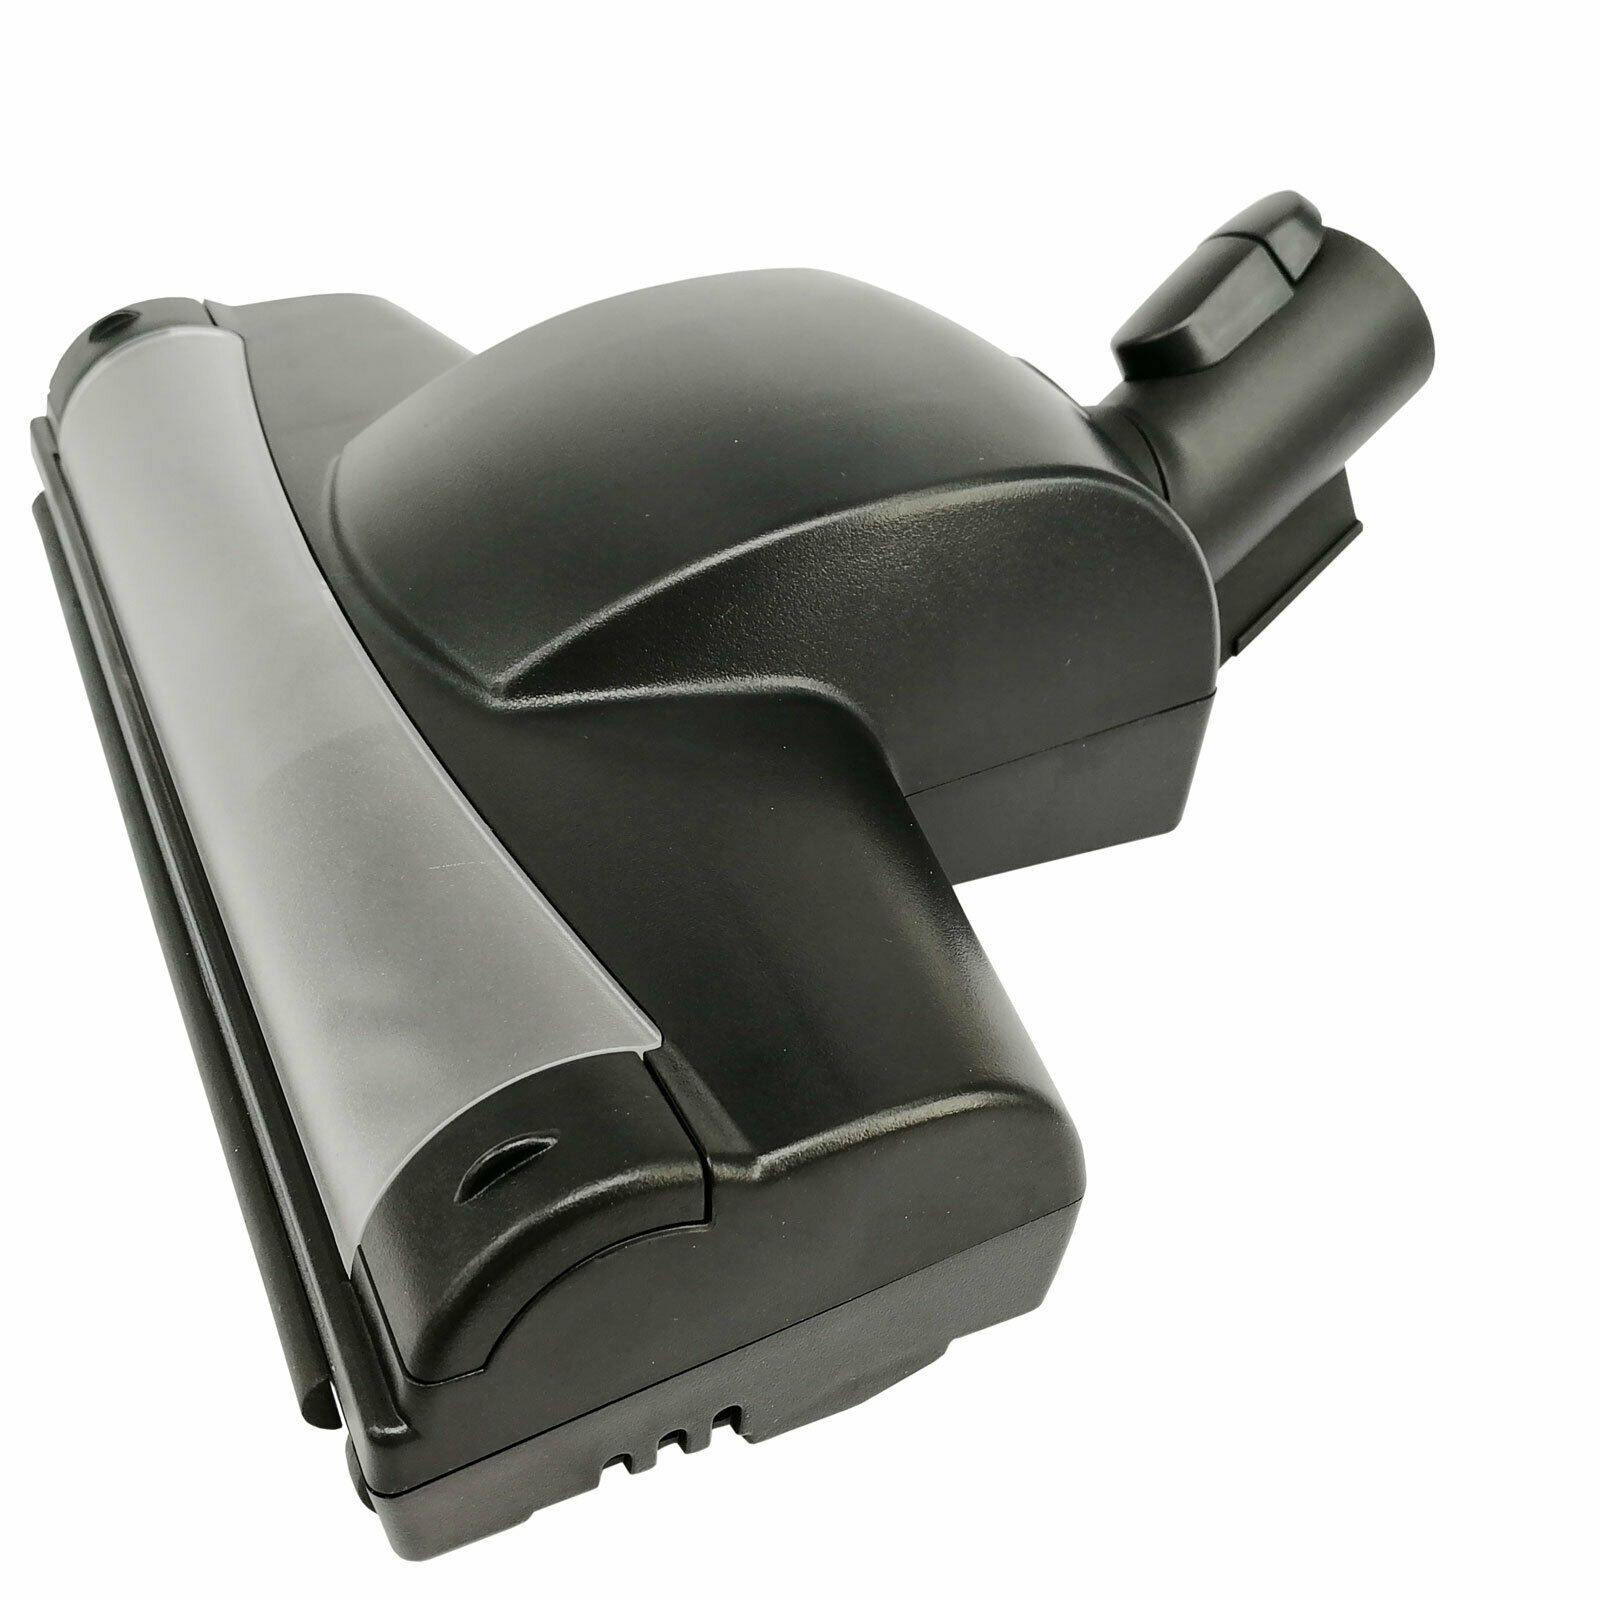 Interlock Turbo Floor Head Nozzle Tool For Miele COMPLETE C2 C3 S2 S5 S8 S8310 Sparesbarn